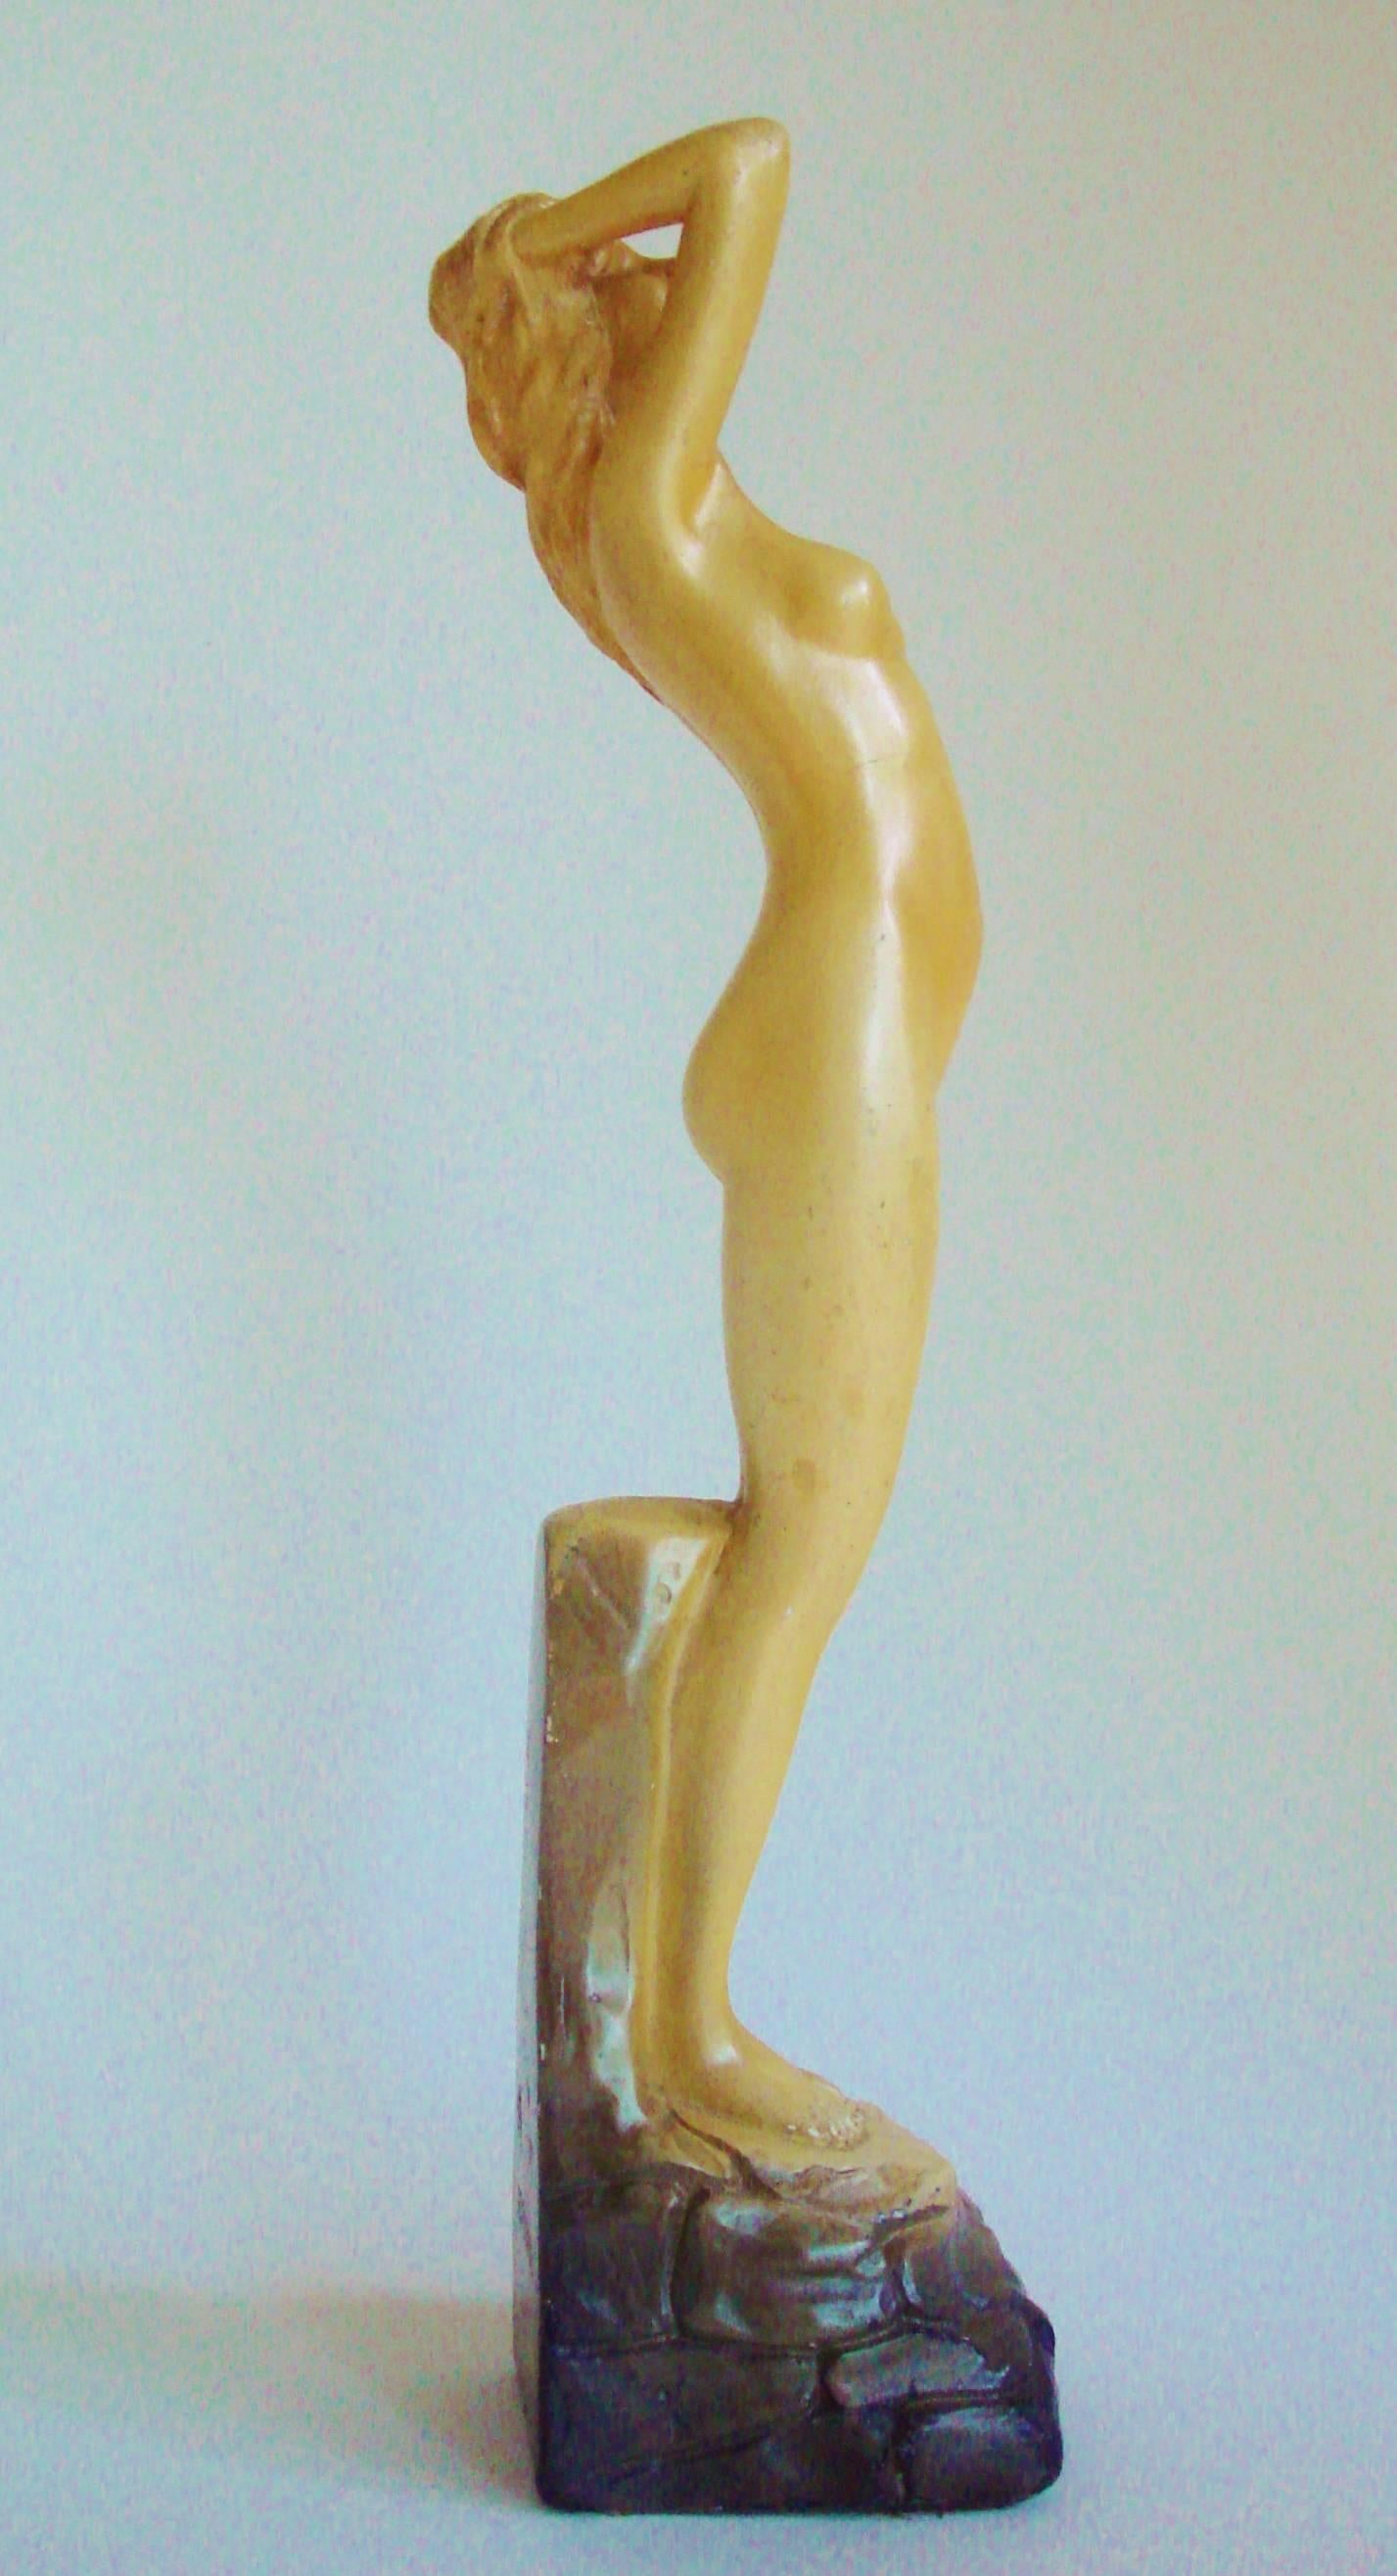 Painted Elegant English Art Deco Polychrome Plaster Female Nude Figure by Leonardi